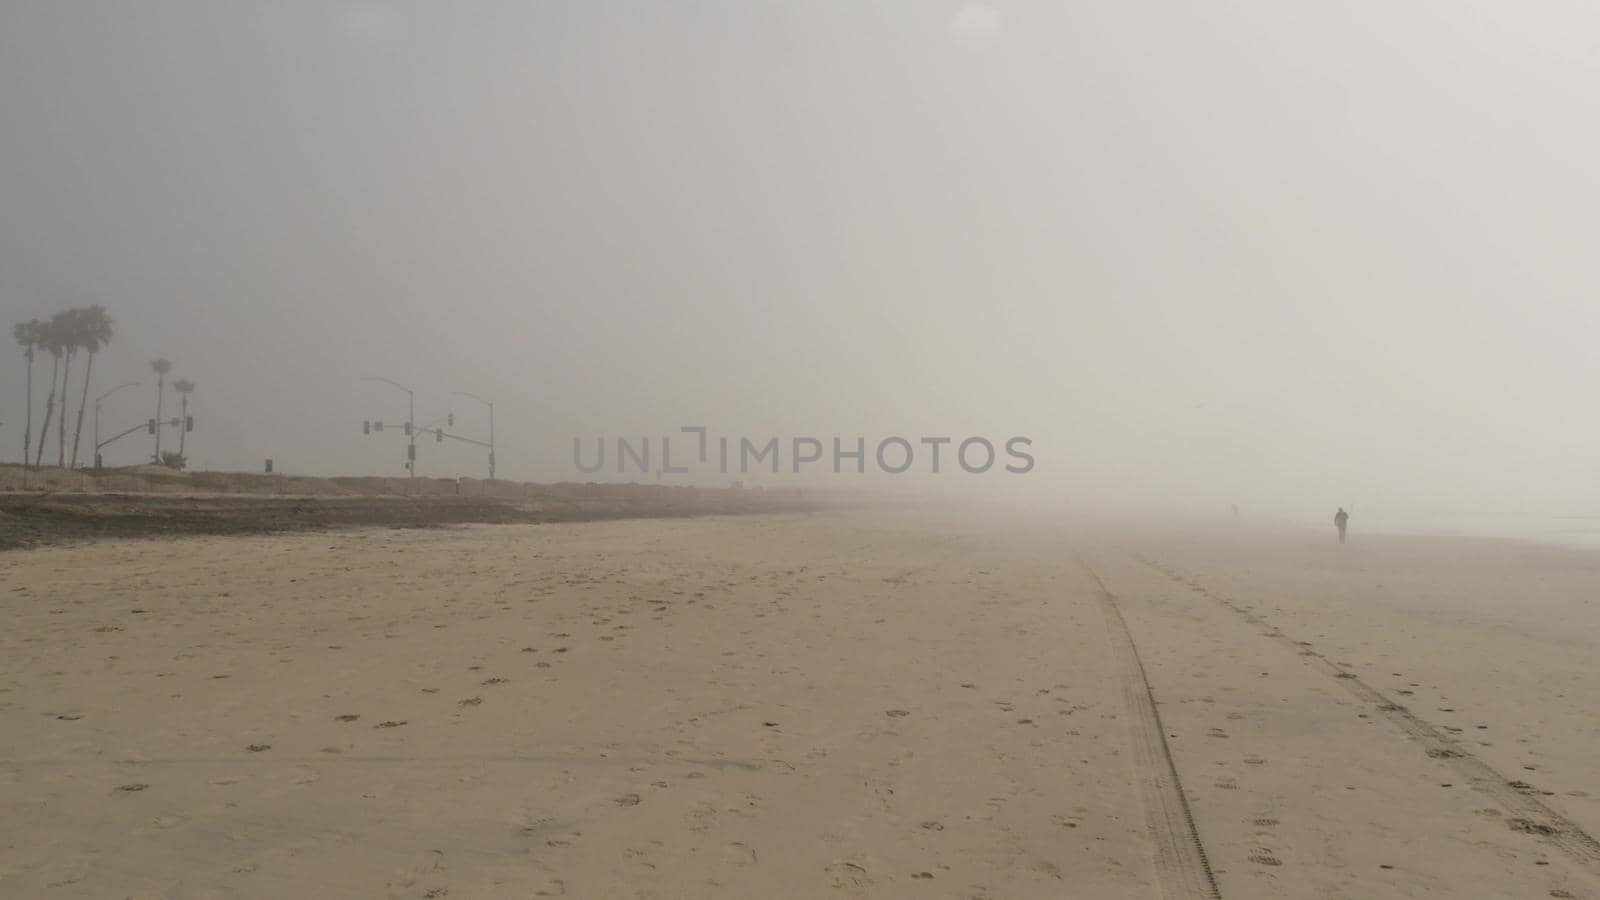 Sandy misty beach, Encinitas California USA. Pacific ocean coast, dense fog brume, empty sea shore. Coastline near Los Angeles, milky smog haze. Gloomy weather on shoreline. Cloudy grey monochrome sky